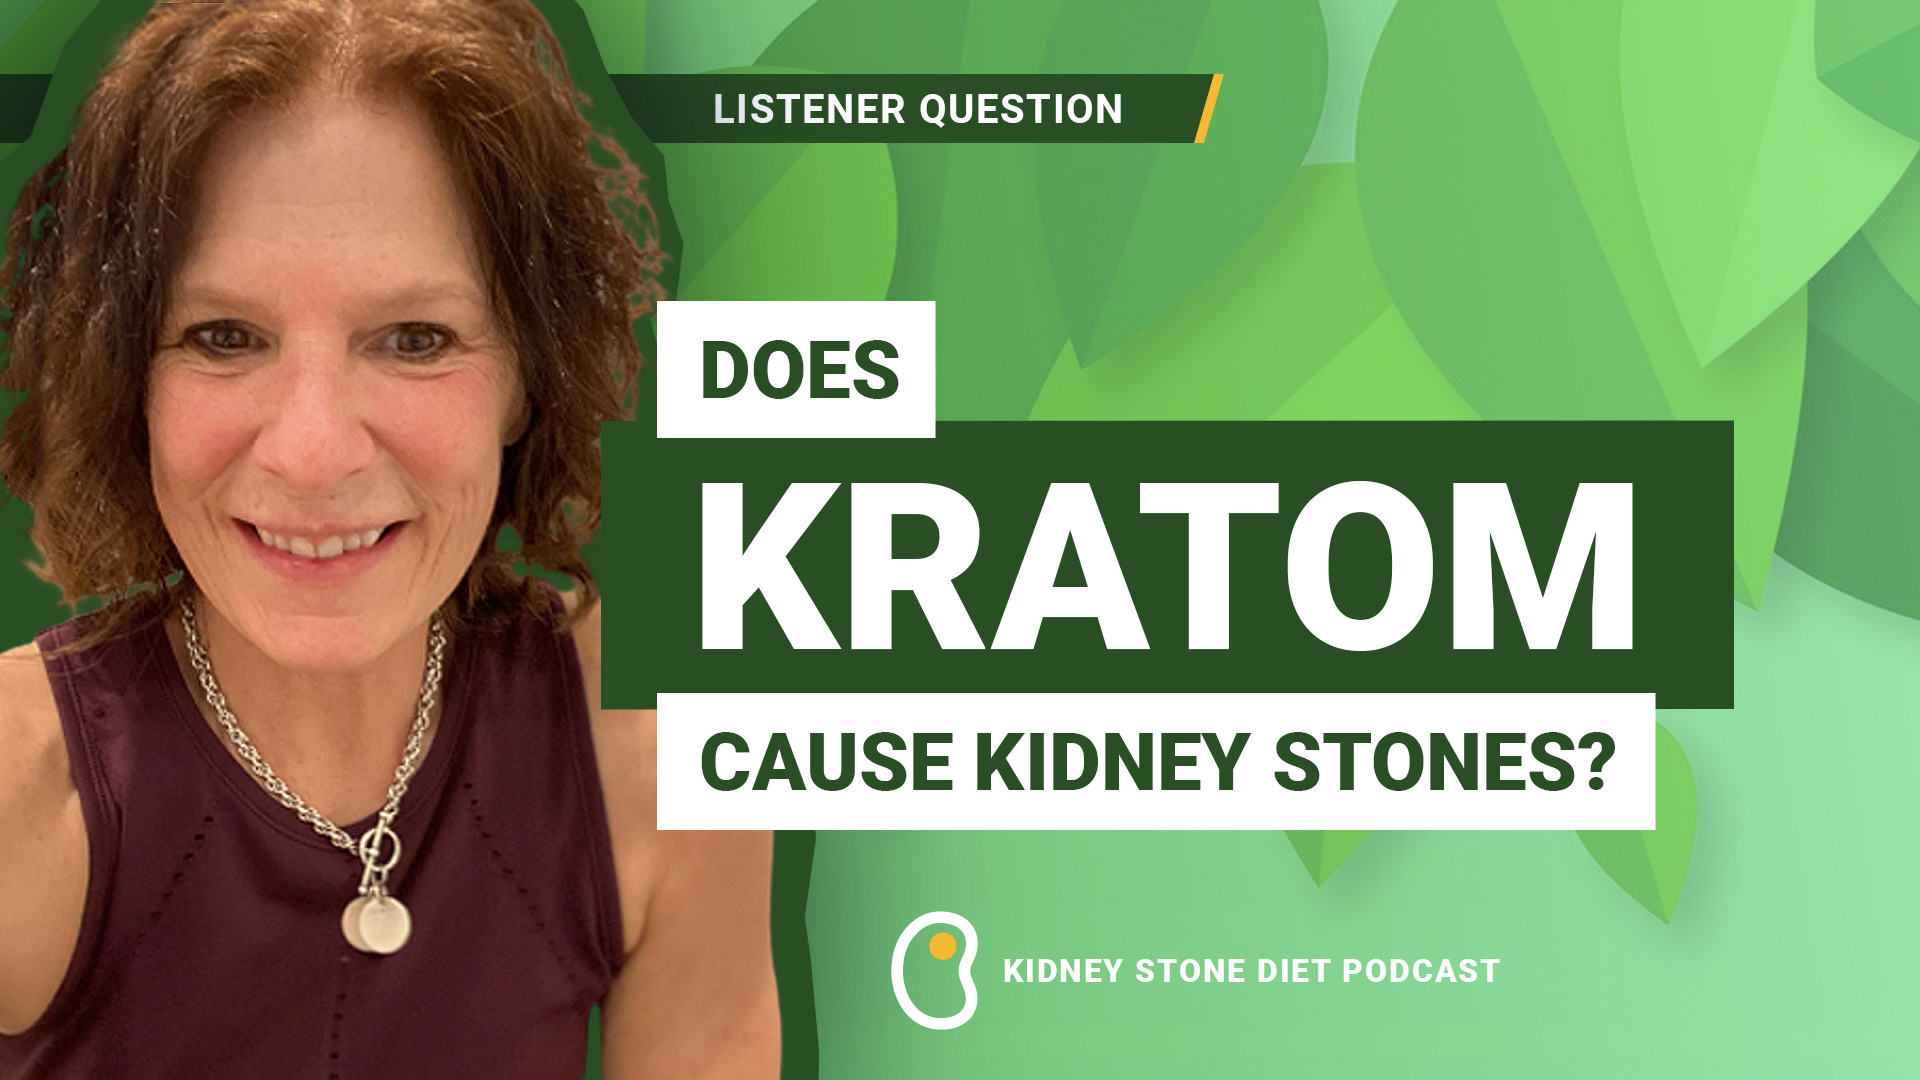 Does Kratom cause kidney stones?